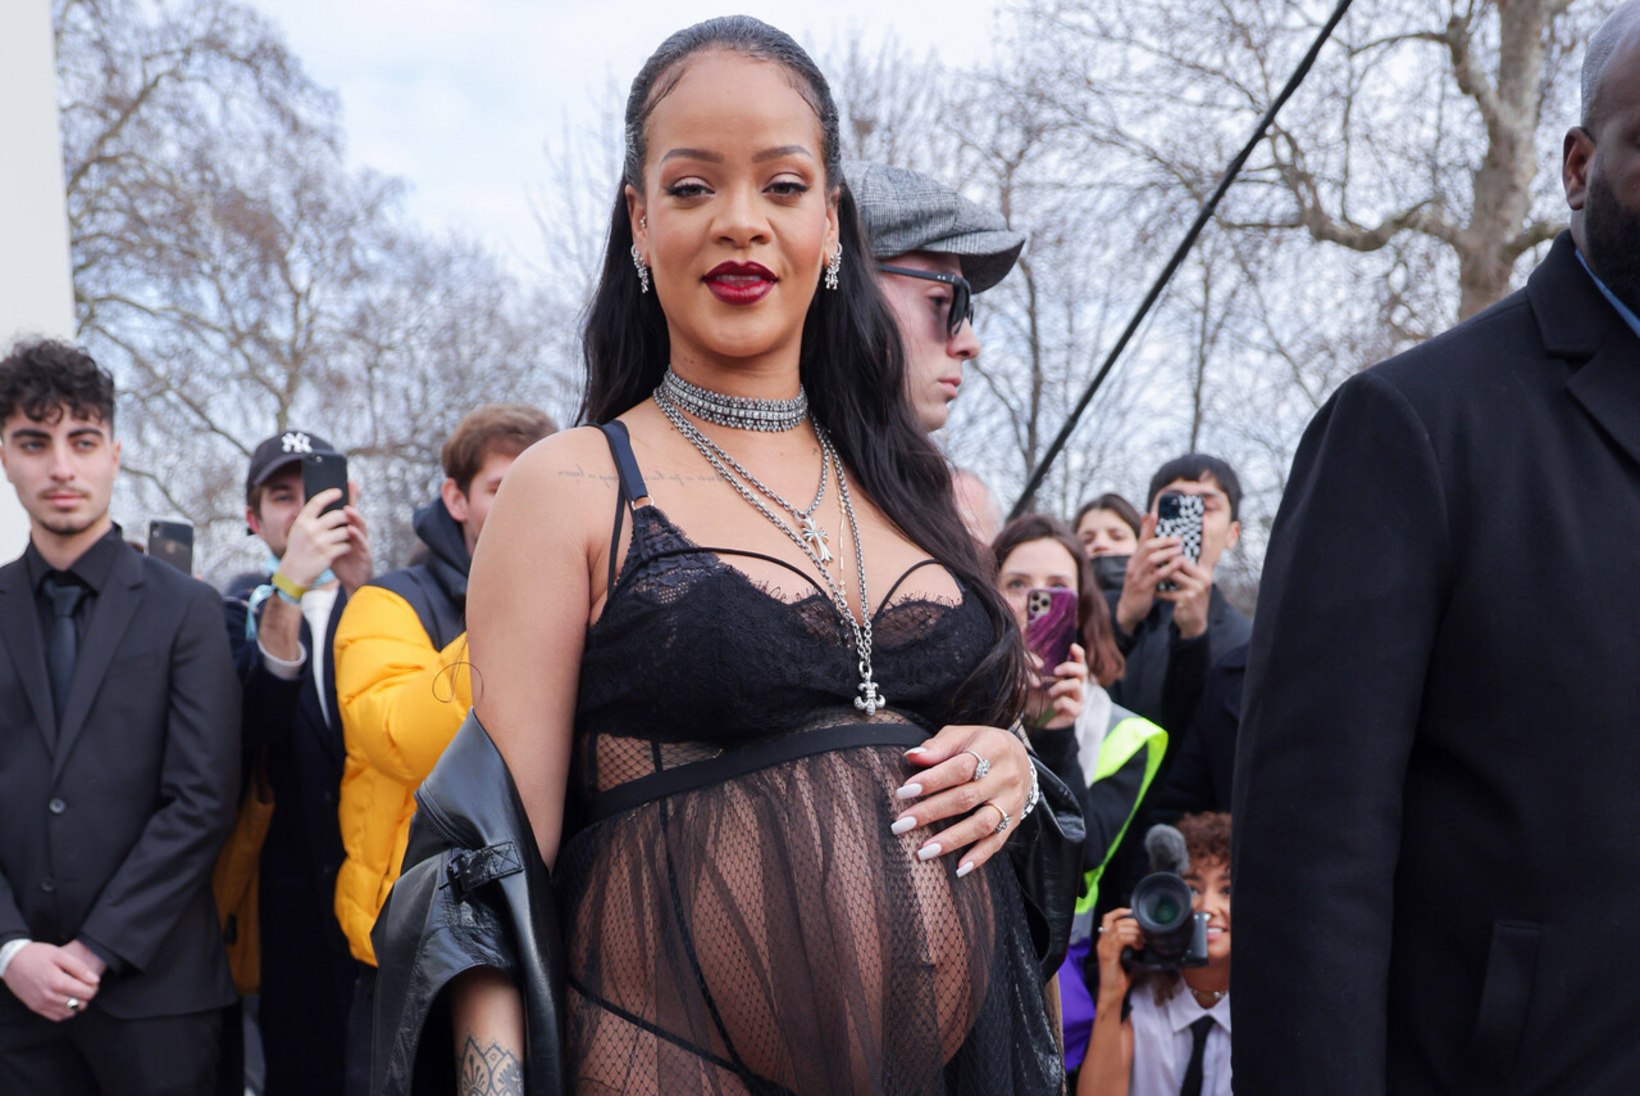 PALJU ÕNNE! Superstaar Rihanna sai emaks